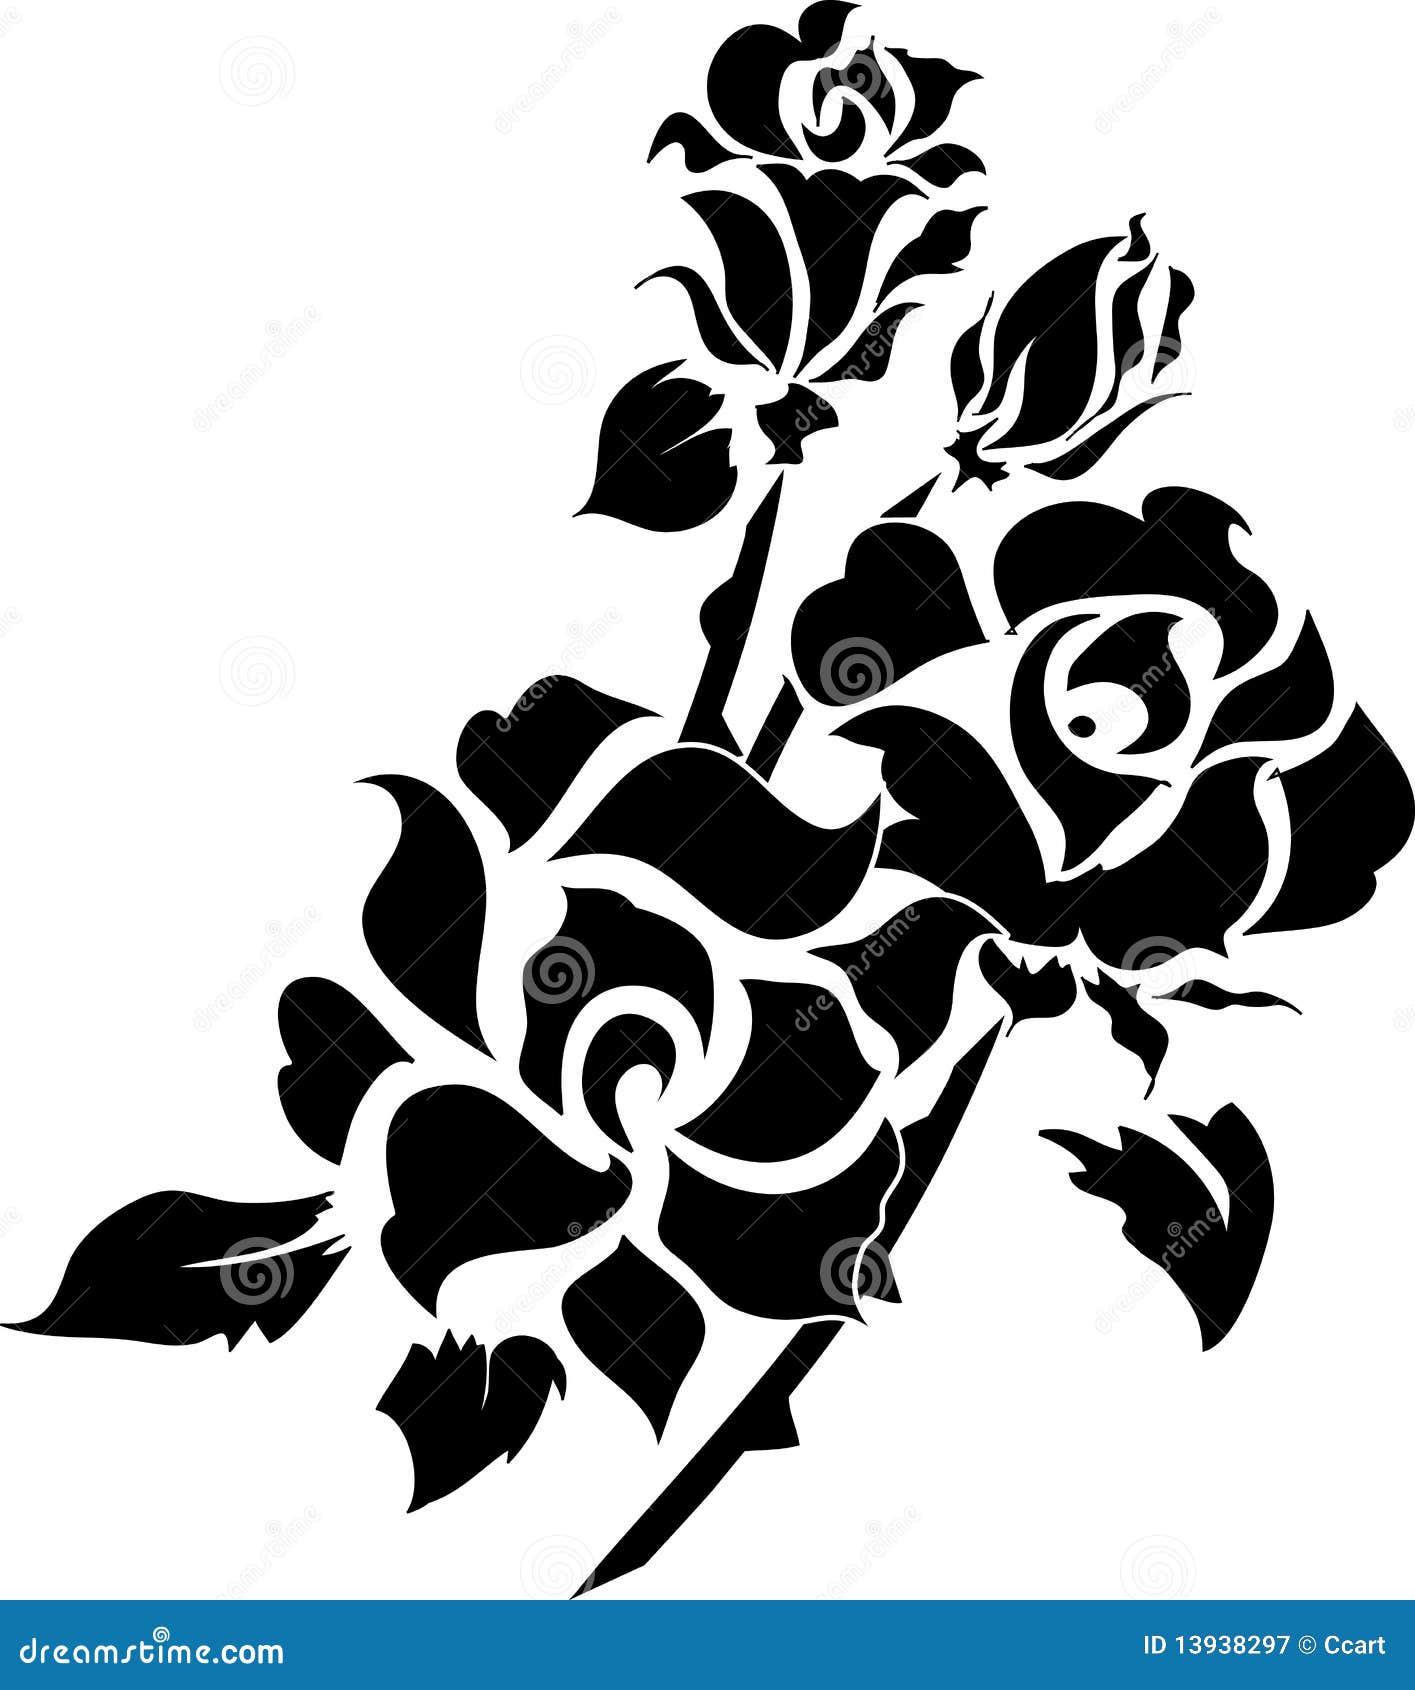 Floral Design Element stock vector. Illustration of victorian - 13938297